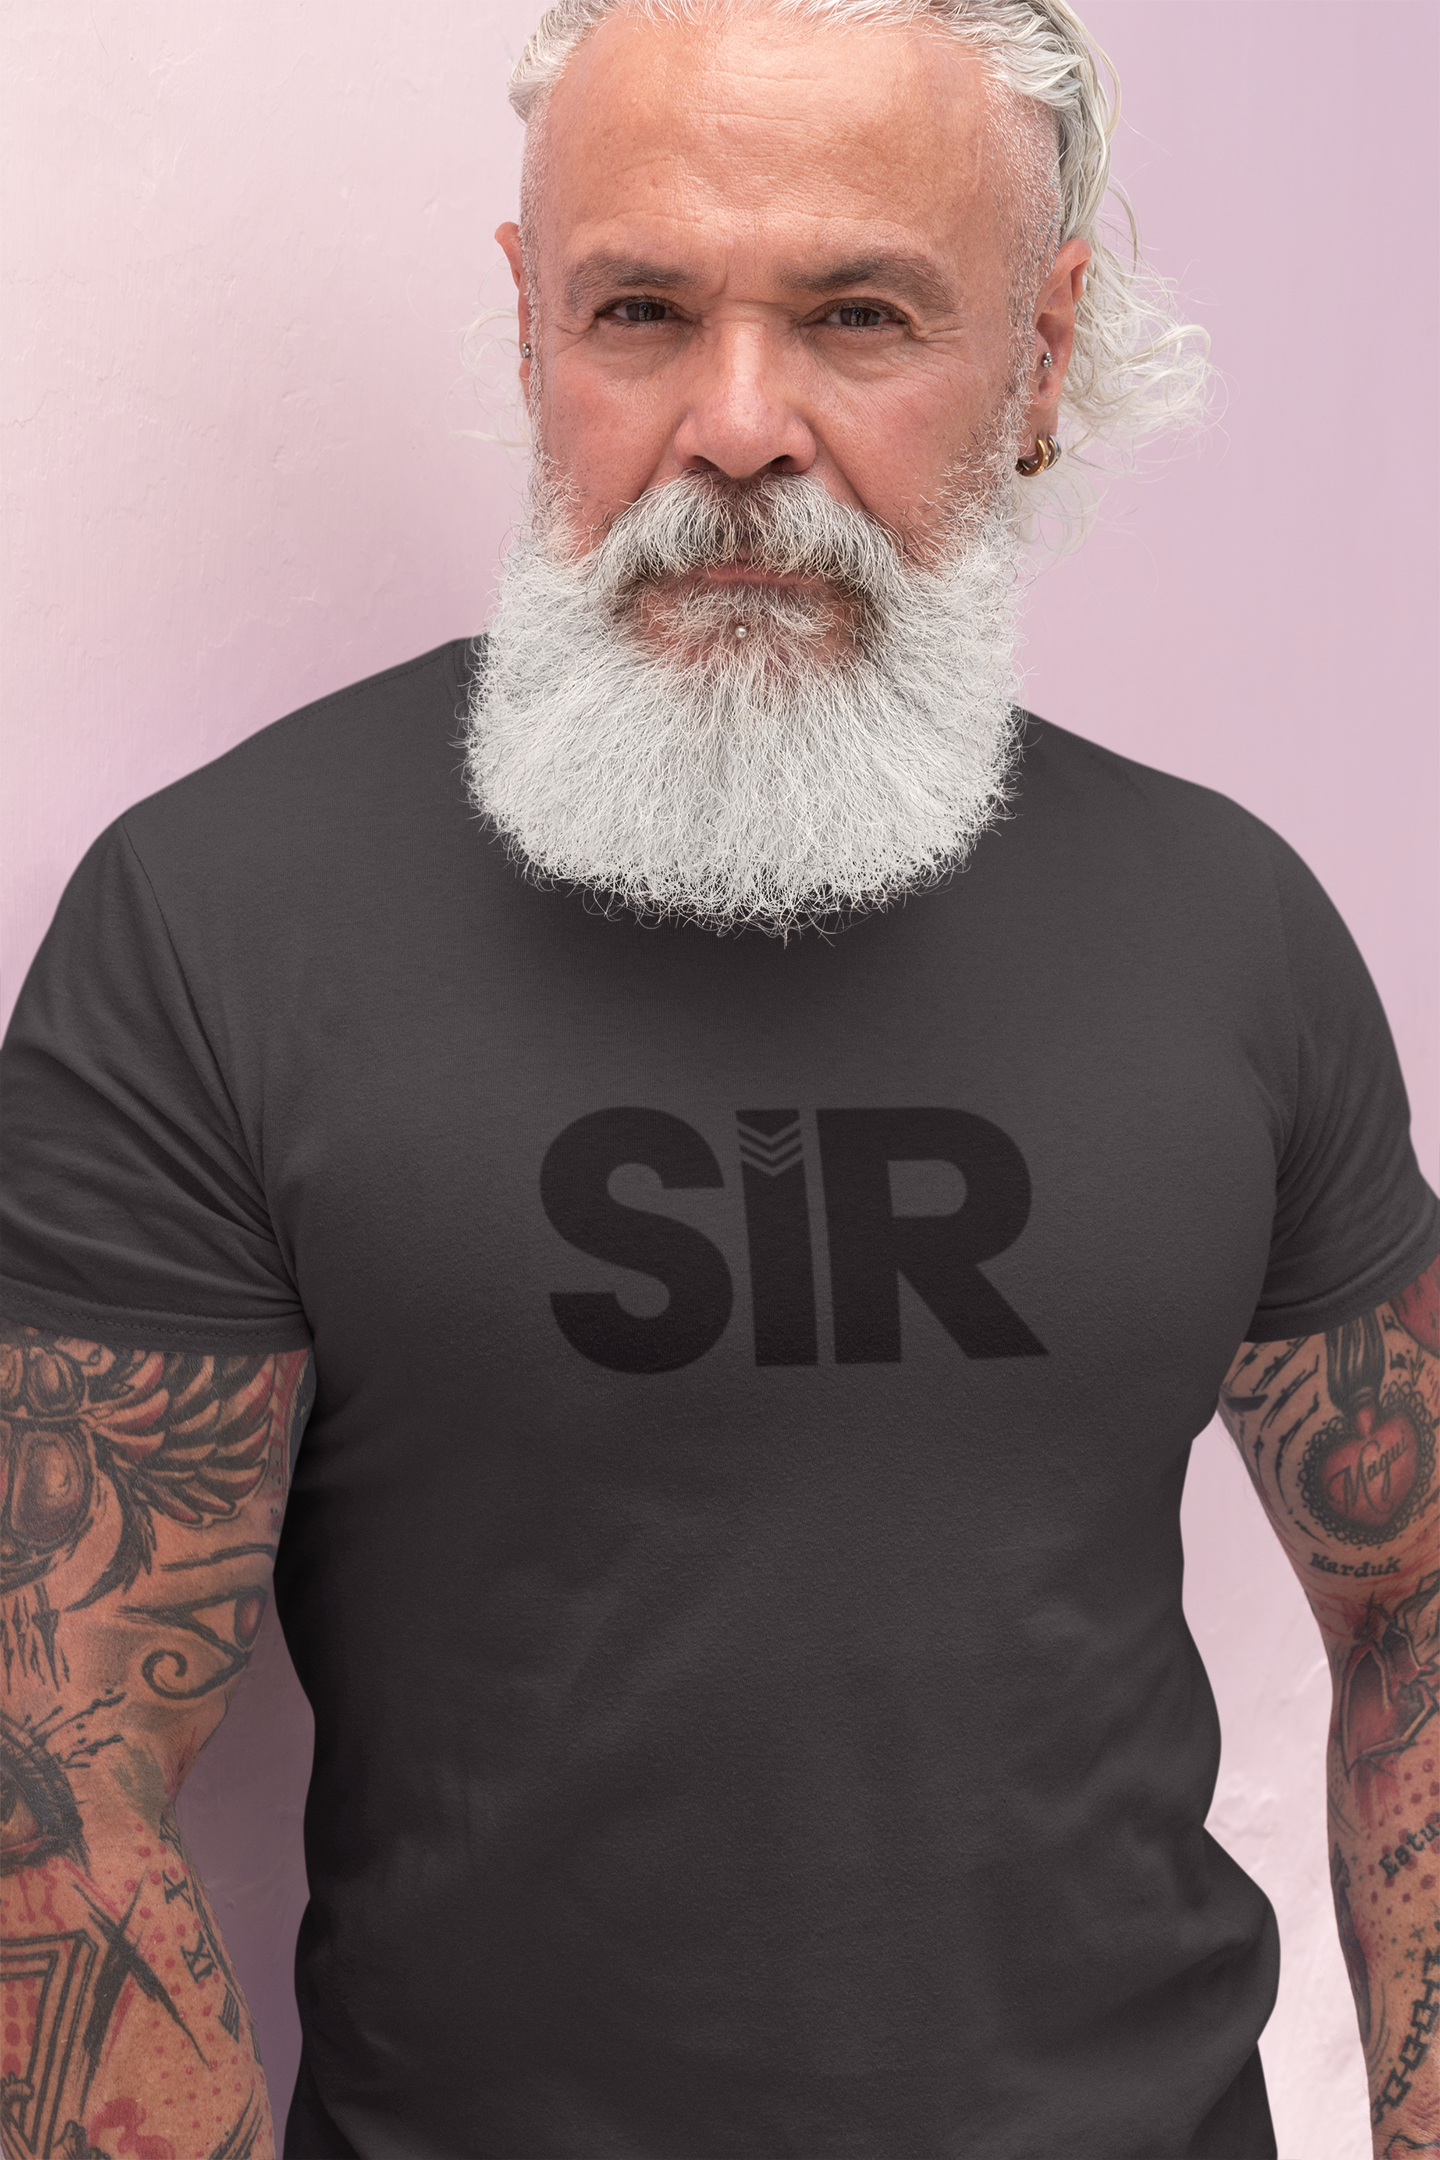 Sir Organic Cotton T-shirt